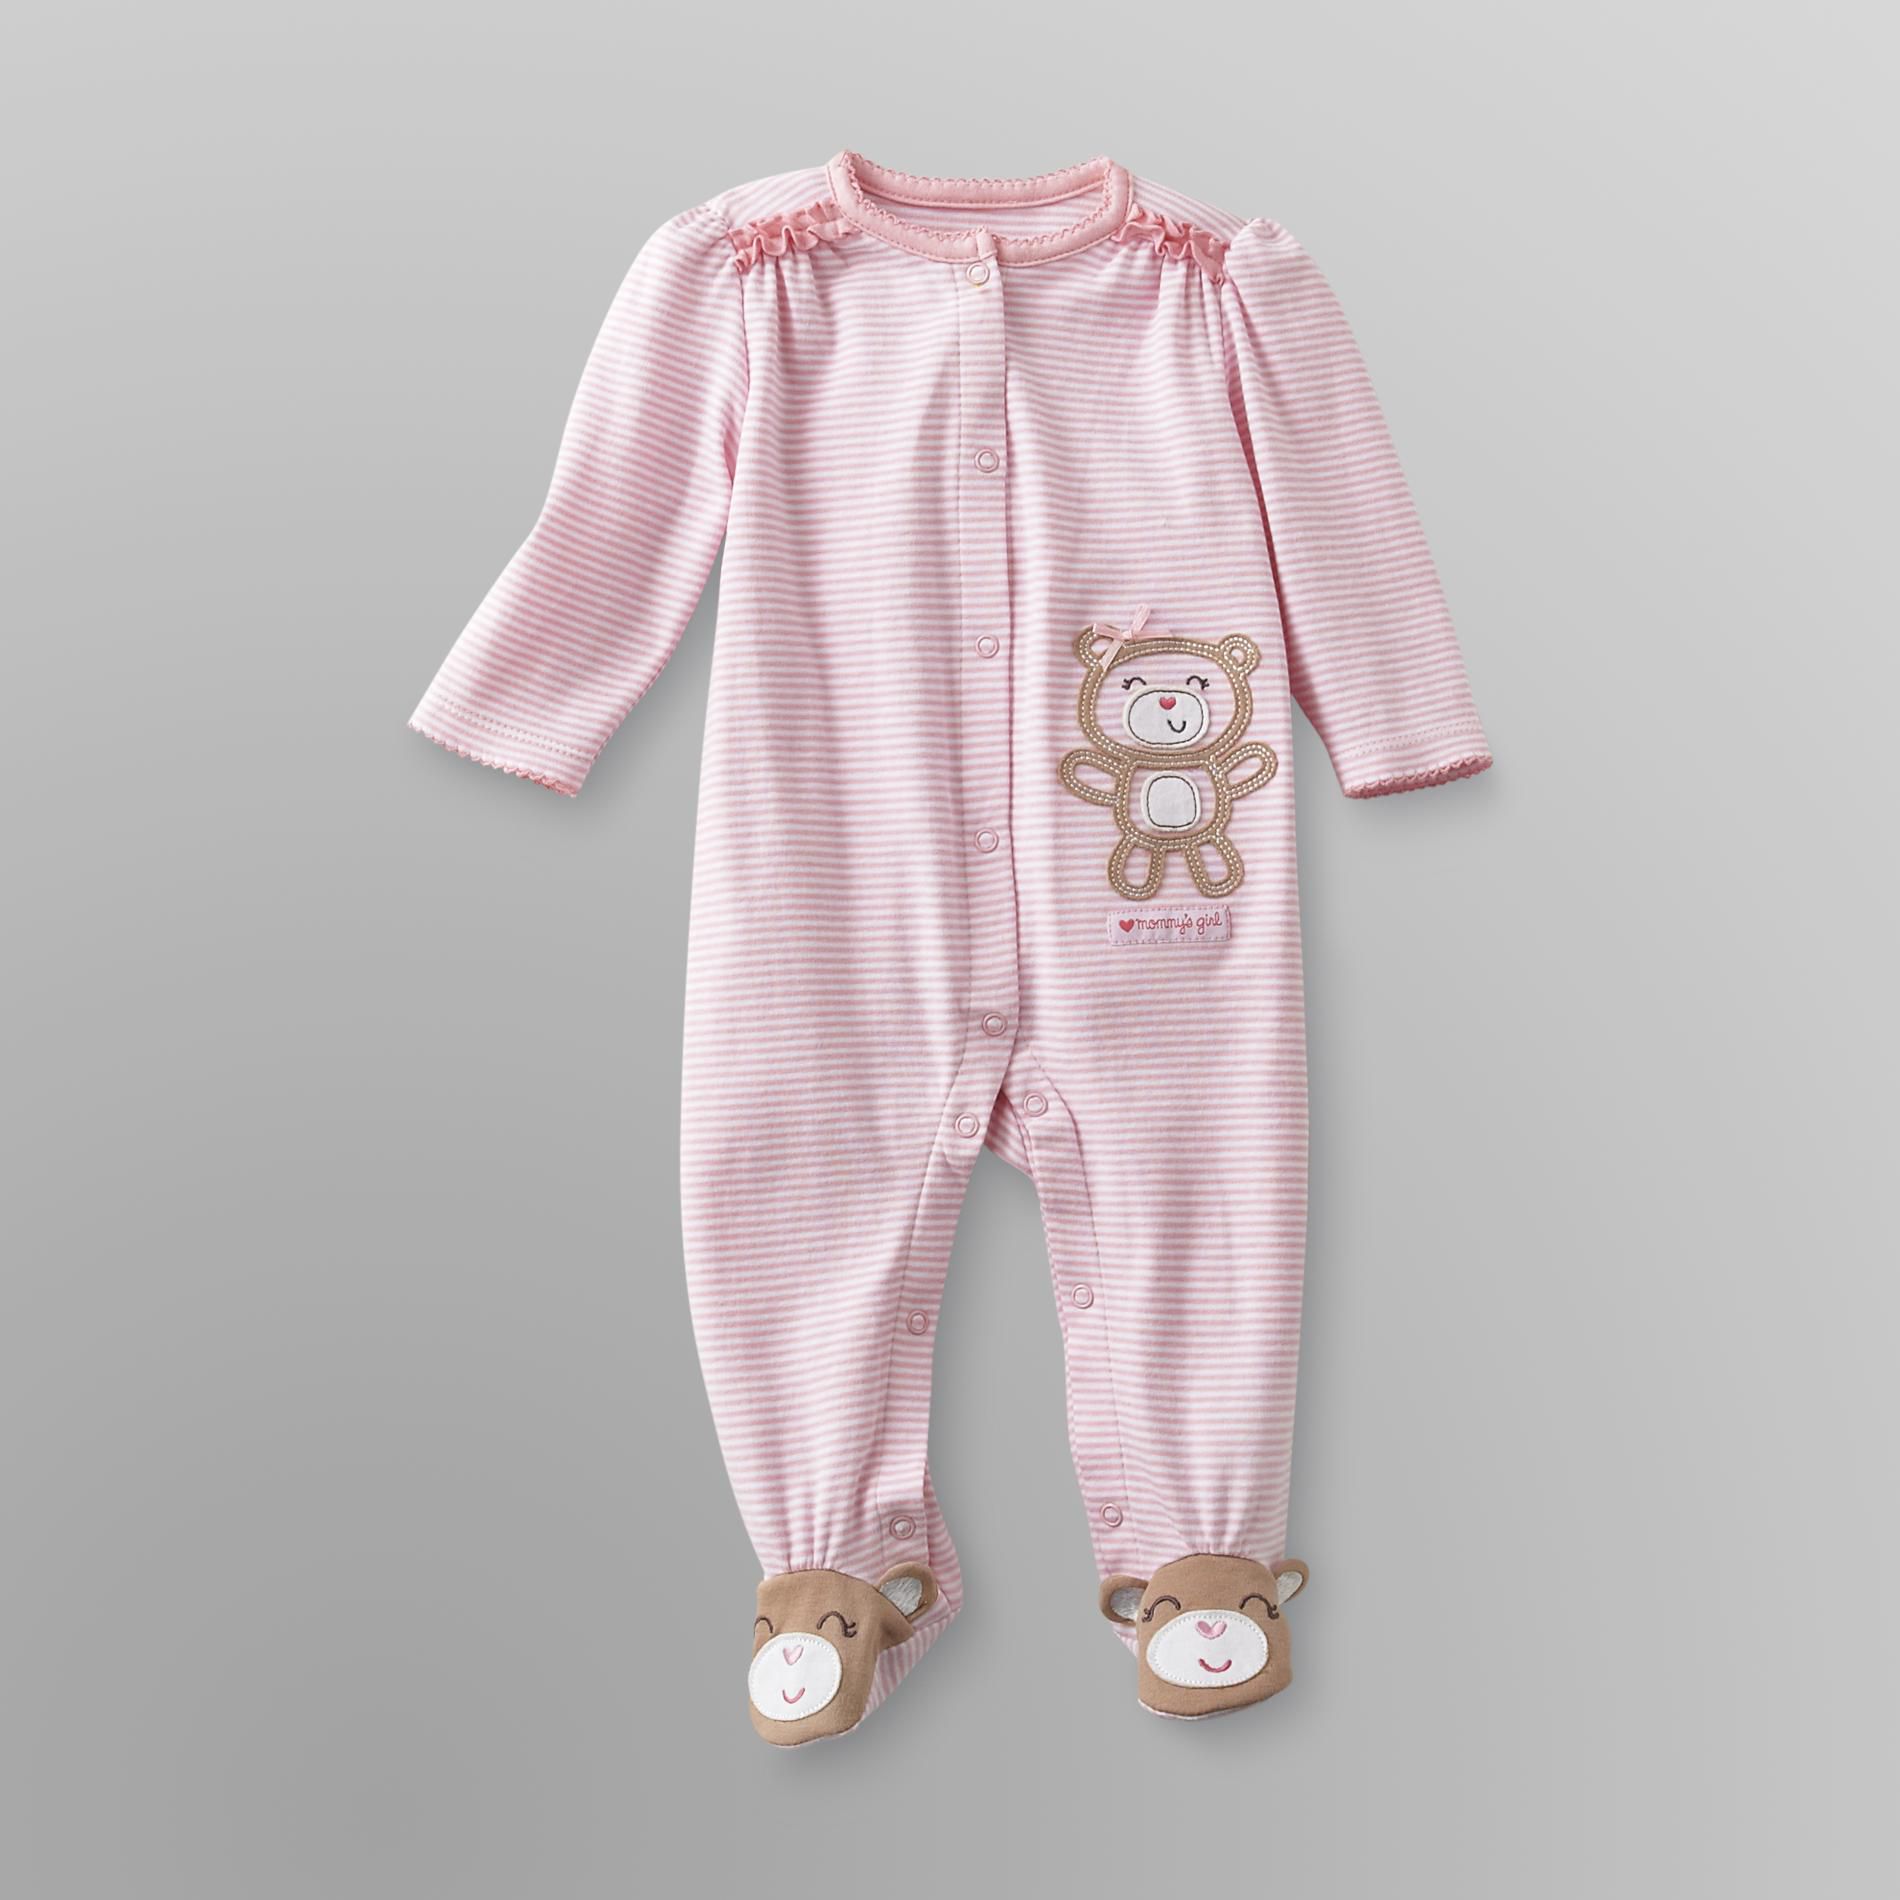 Little Wonders Newborn Girl's Sleeper Pajamas